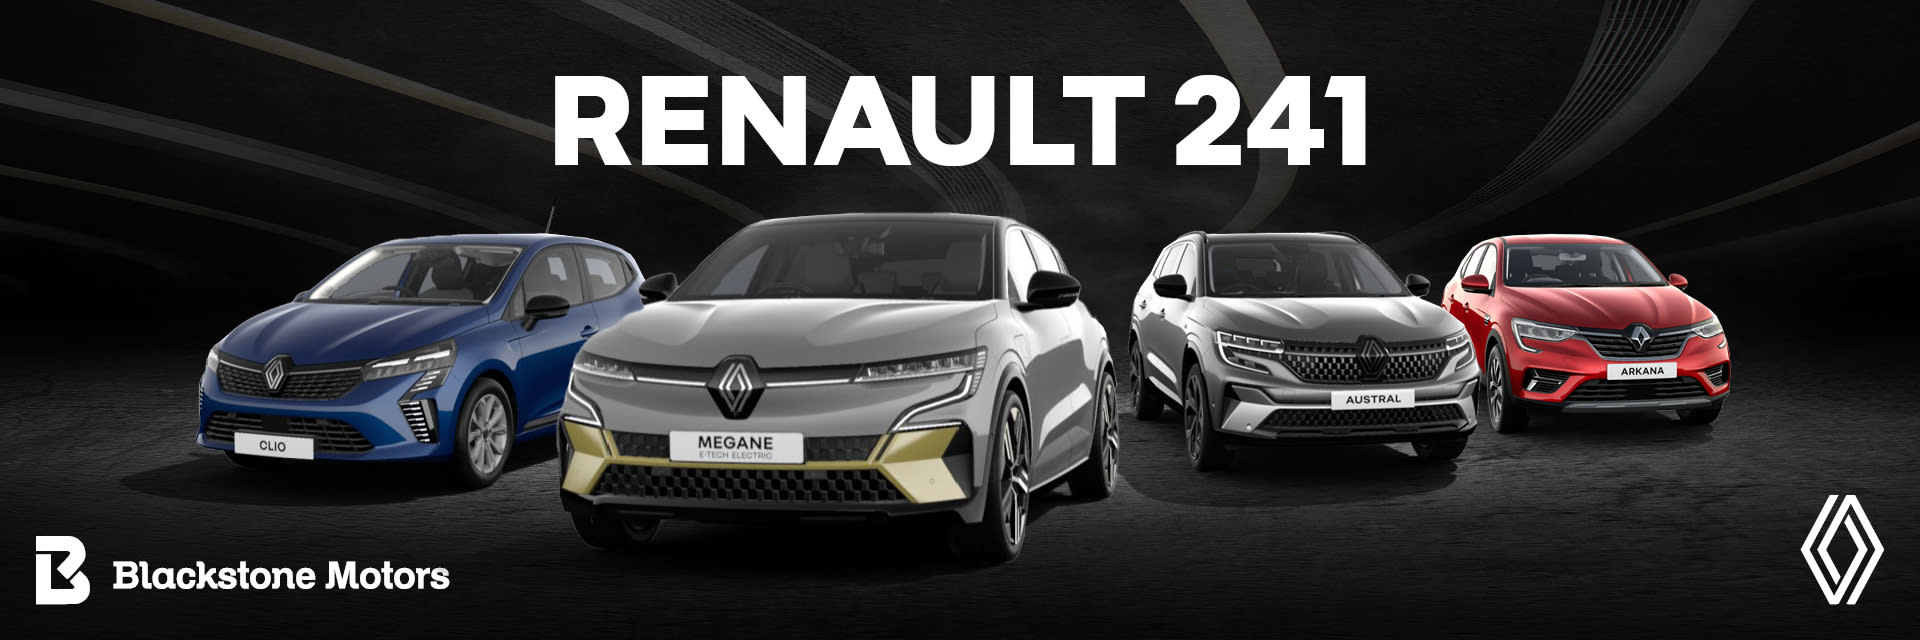 Renault 241